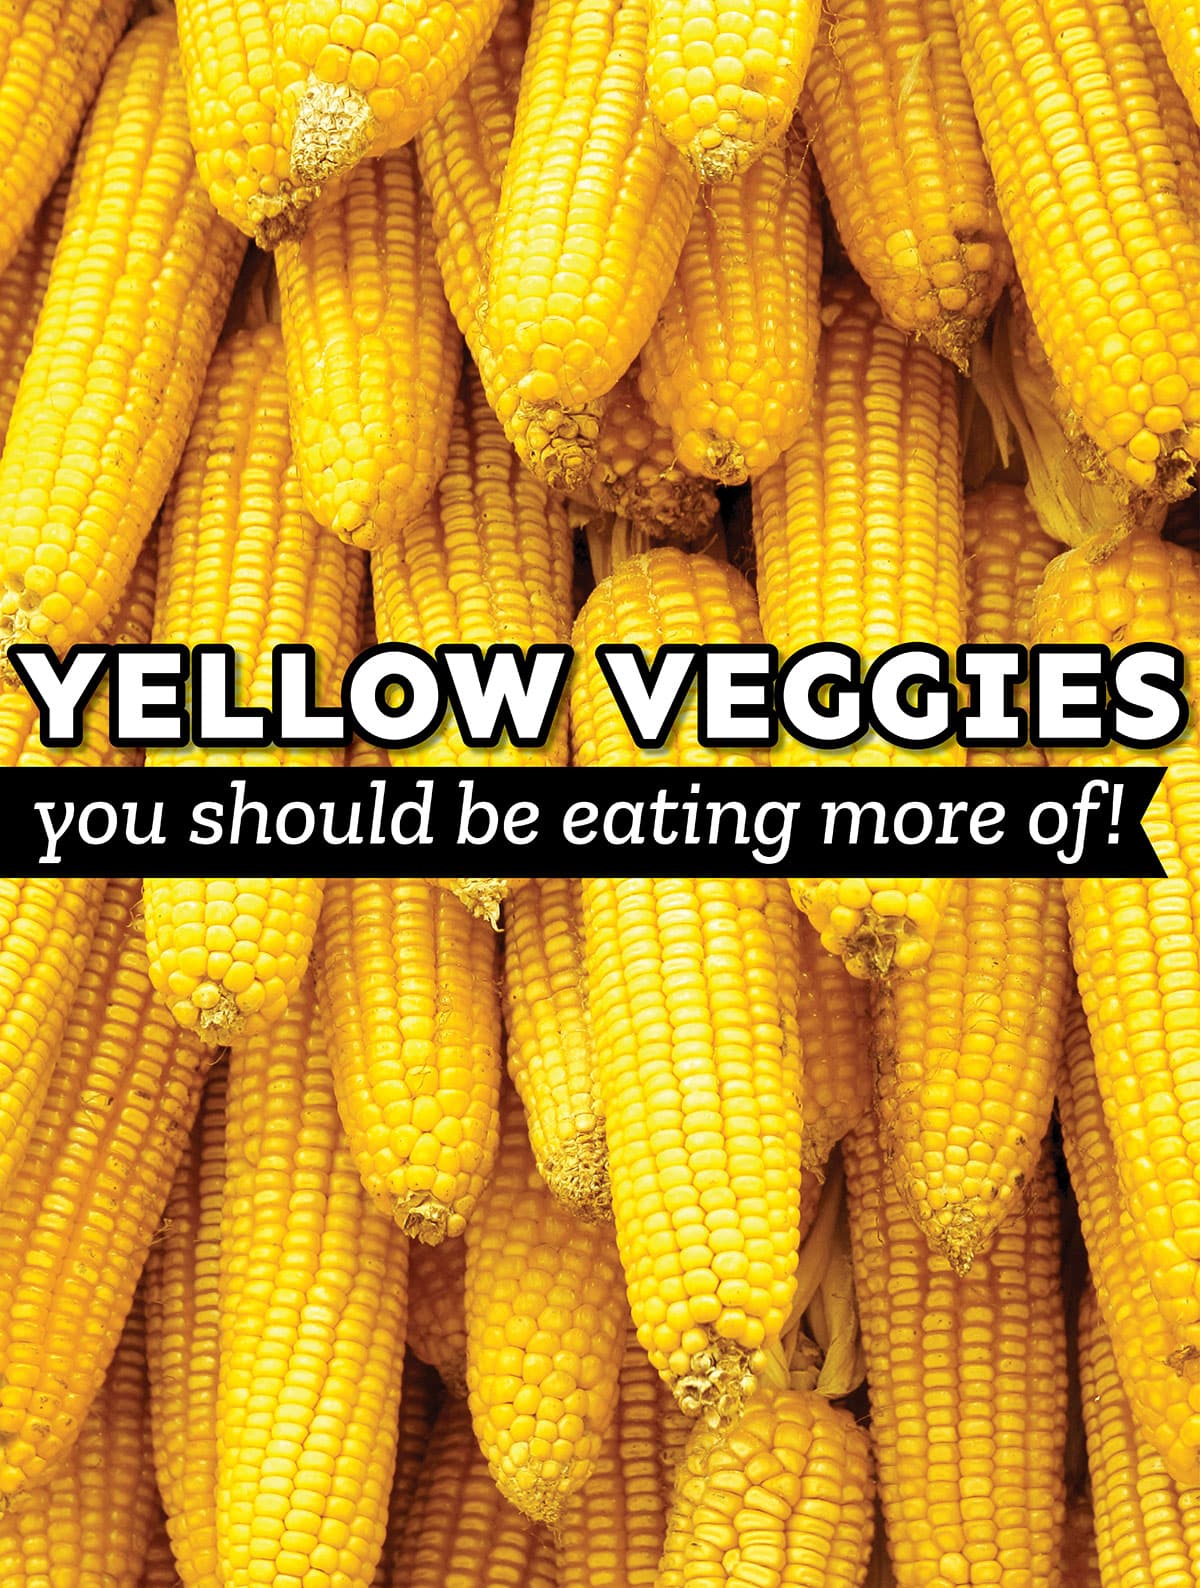 Collage that says "yellow veggies".